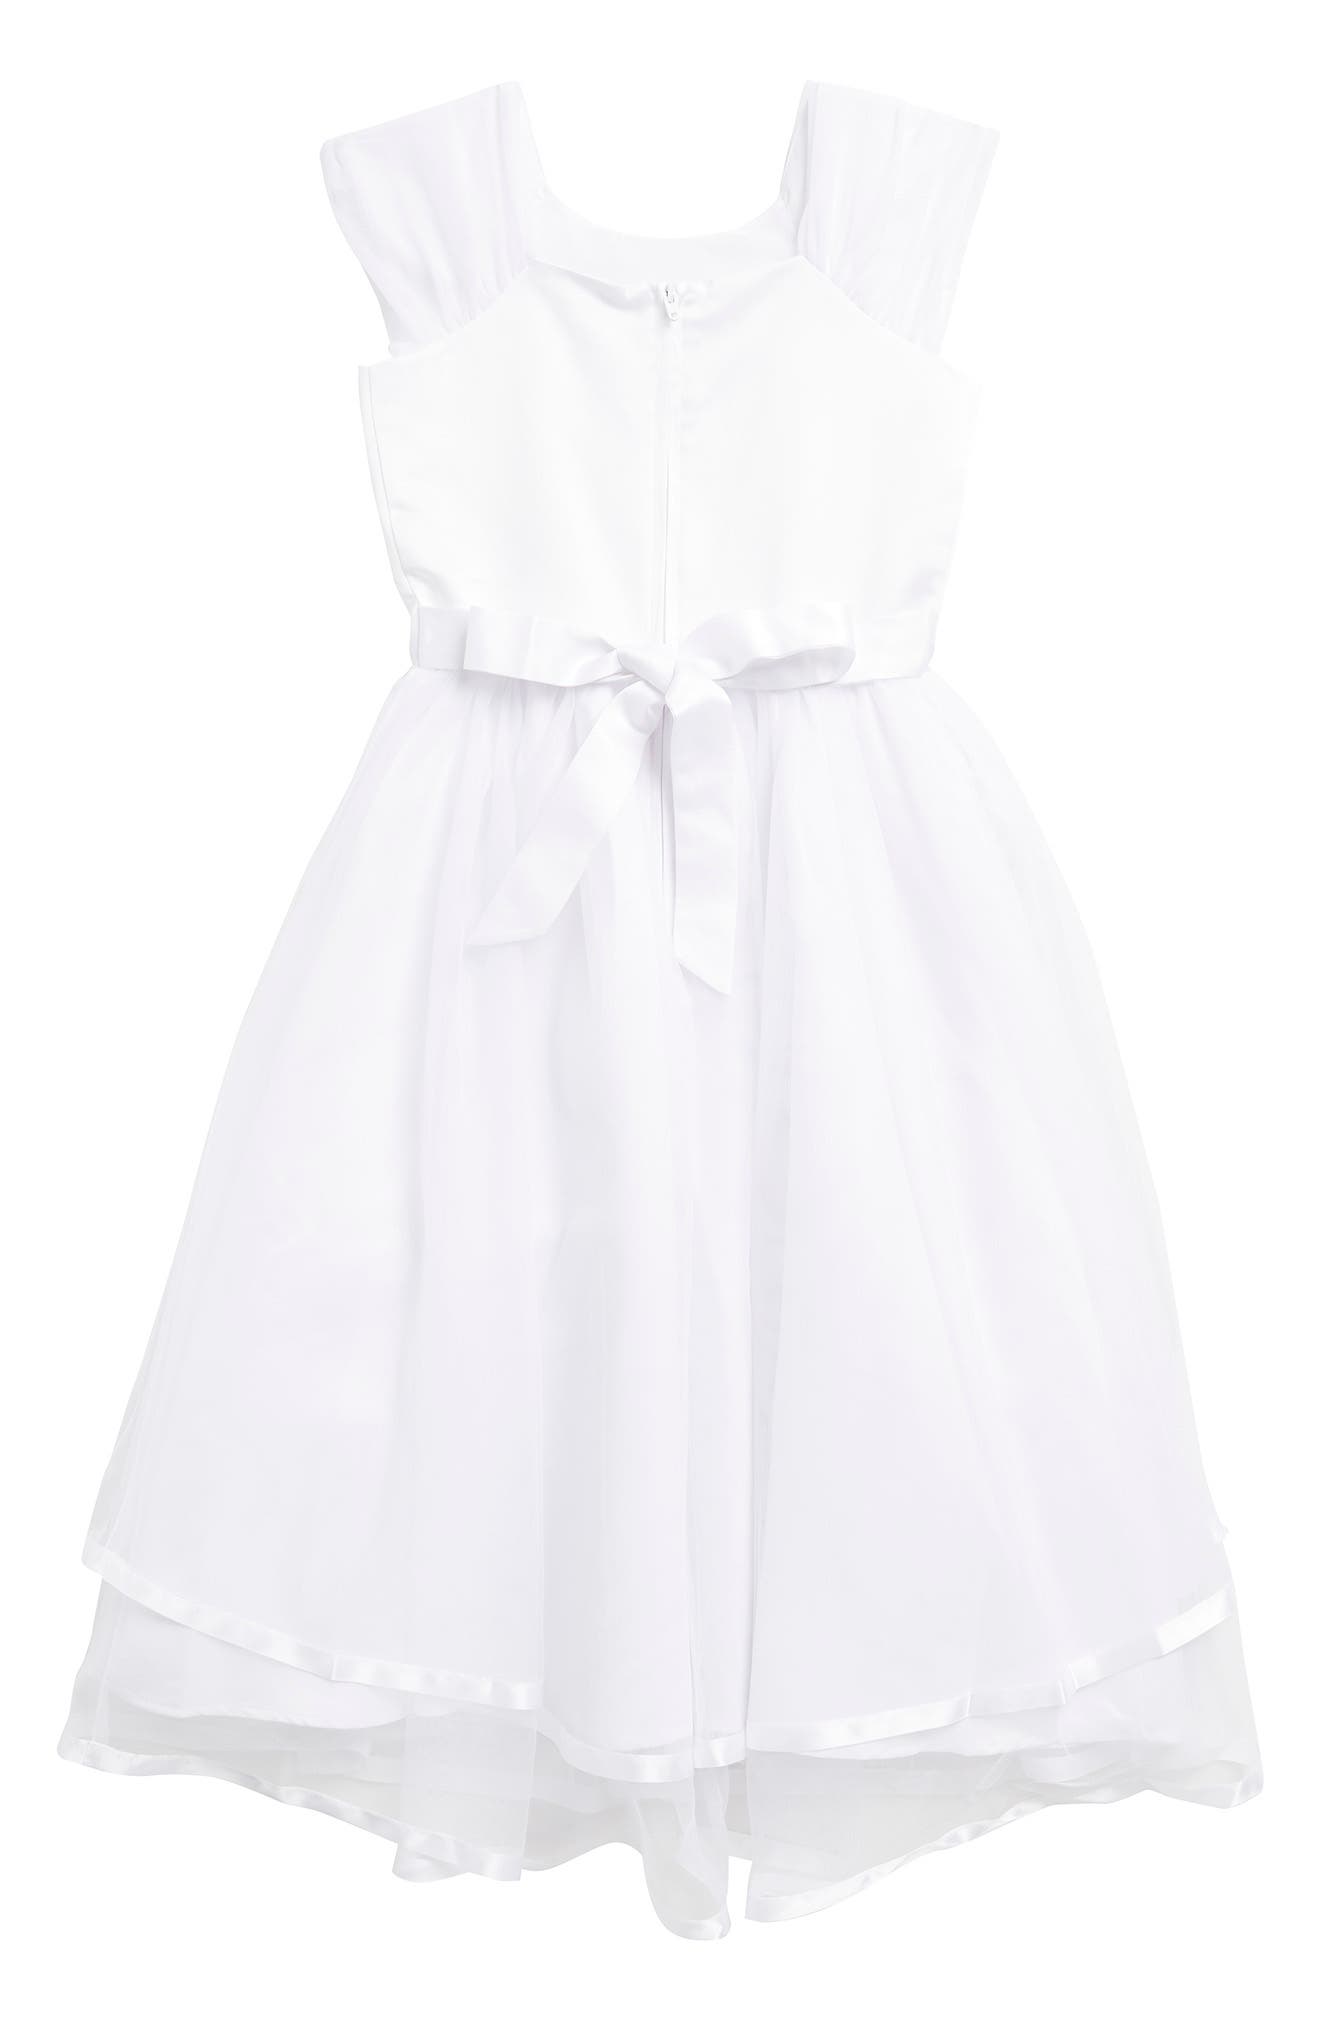 Ella-135-New White Organza Tulle Communion Dress Flower Girl Dress size 8 to 16. 